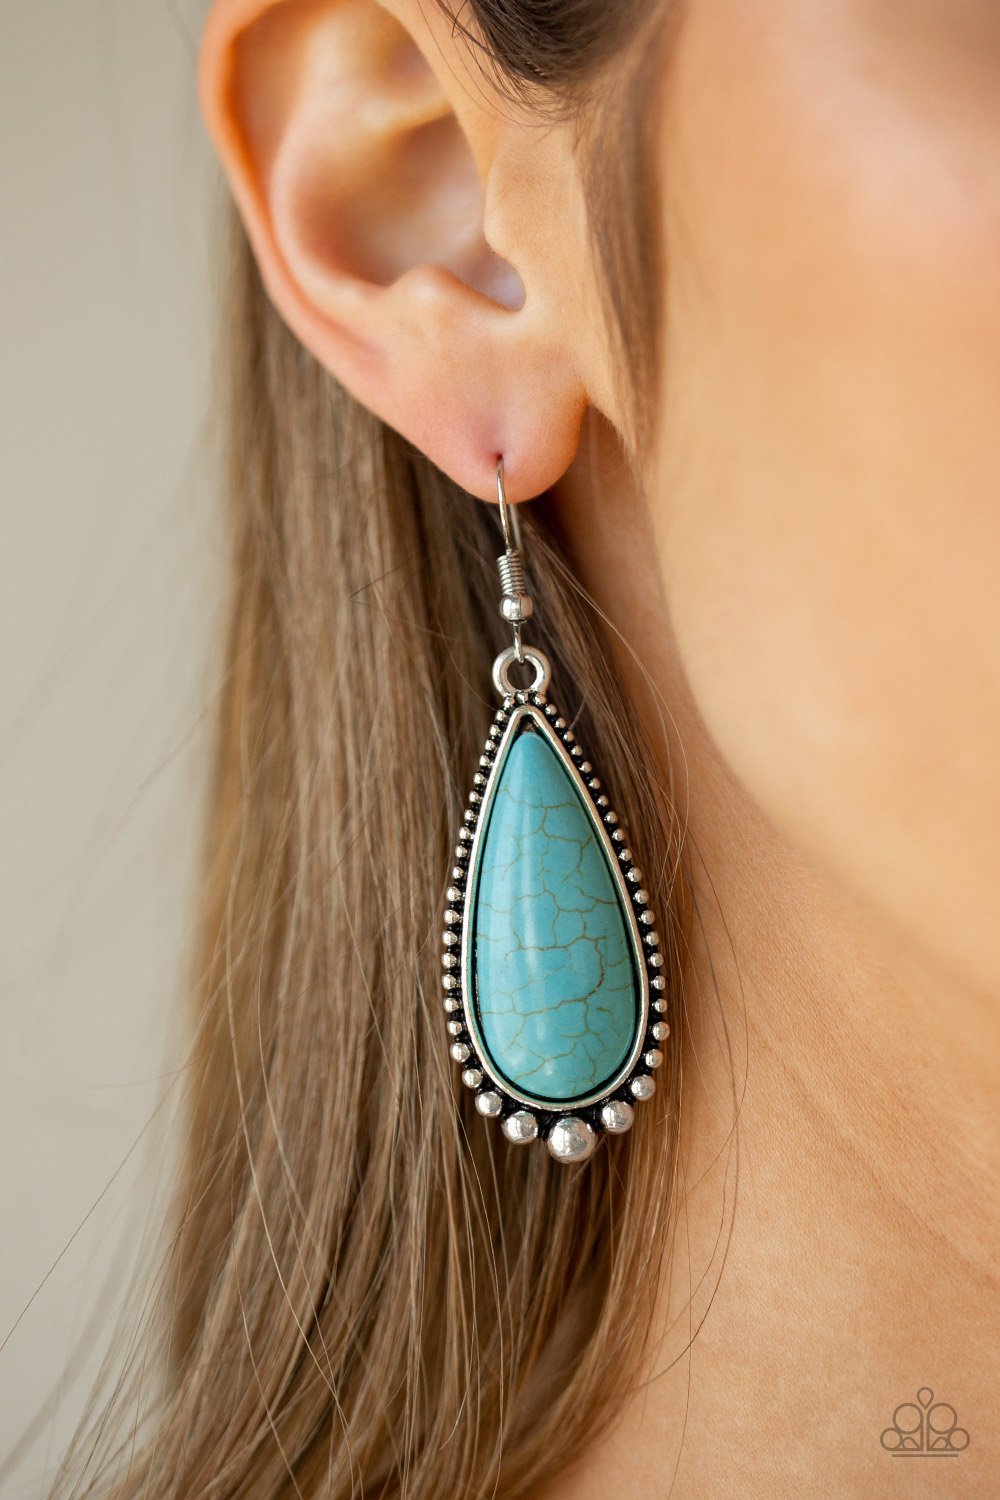 Desert Quench - Blue/Turquoise earrings